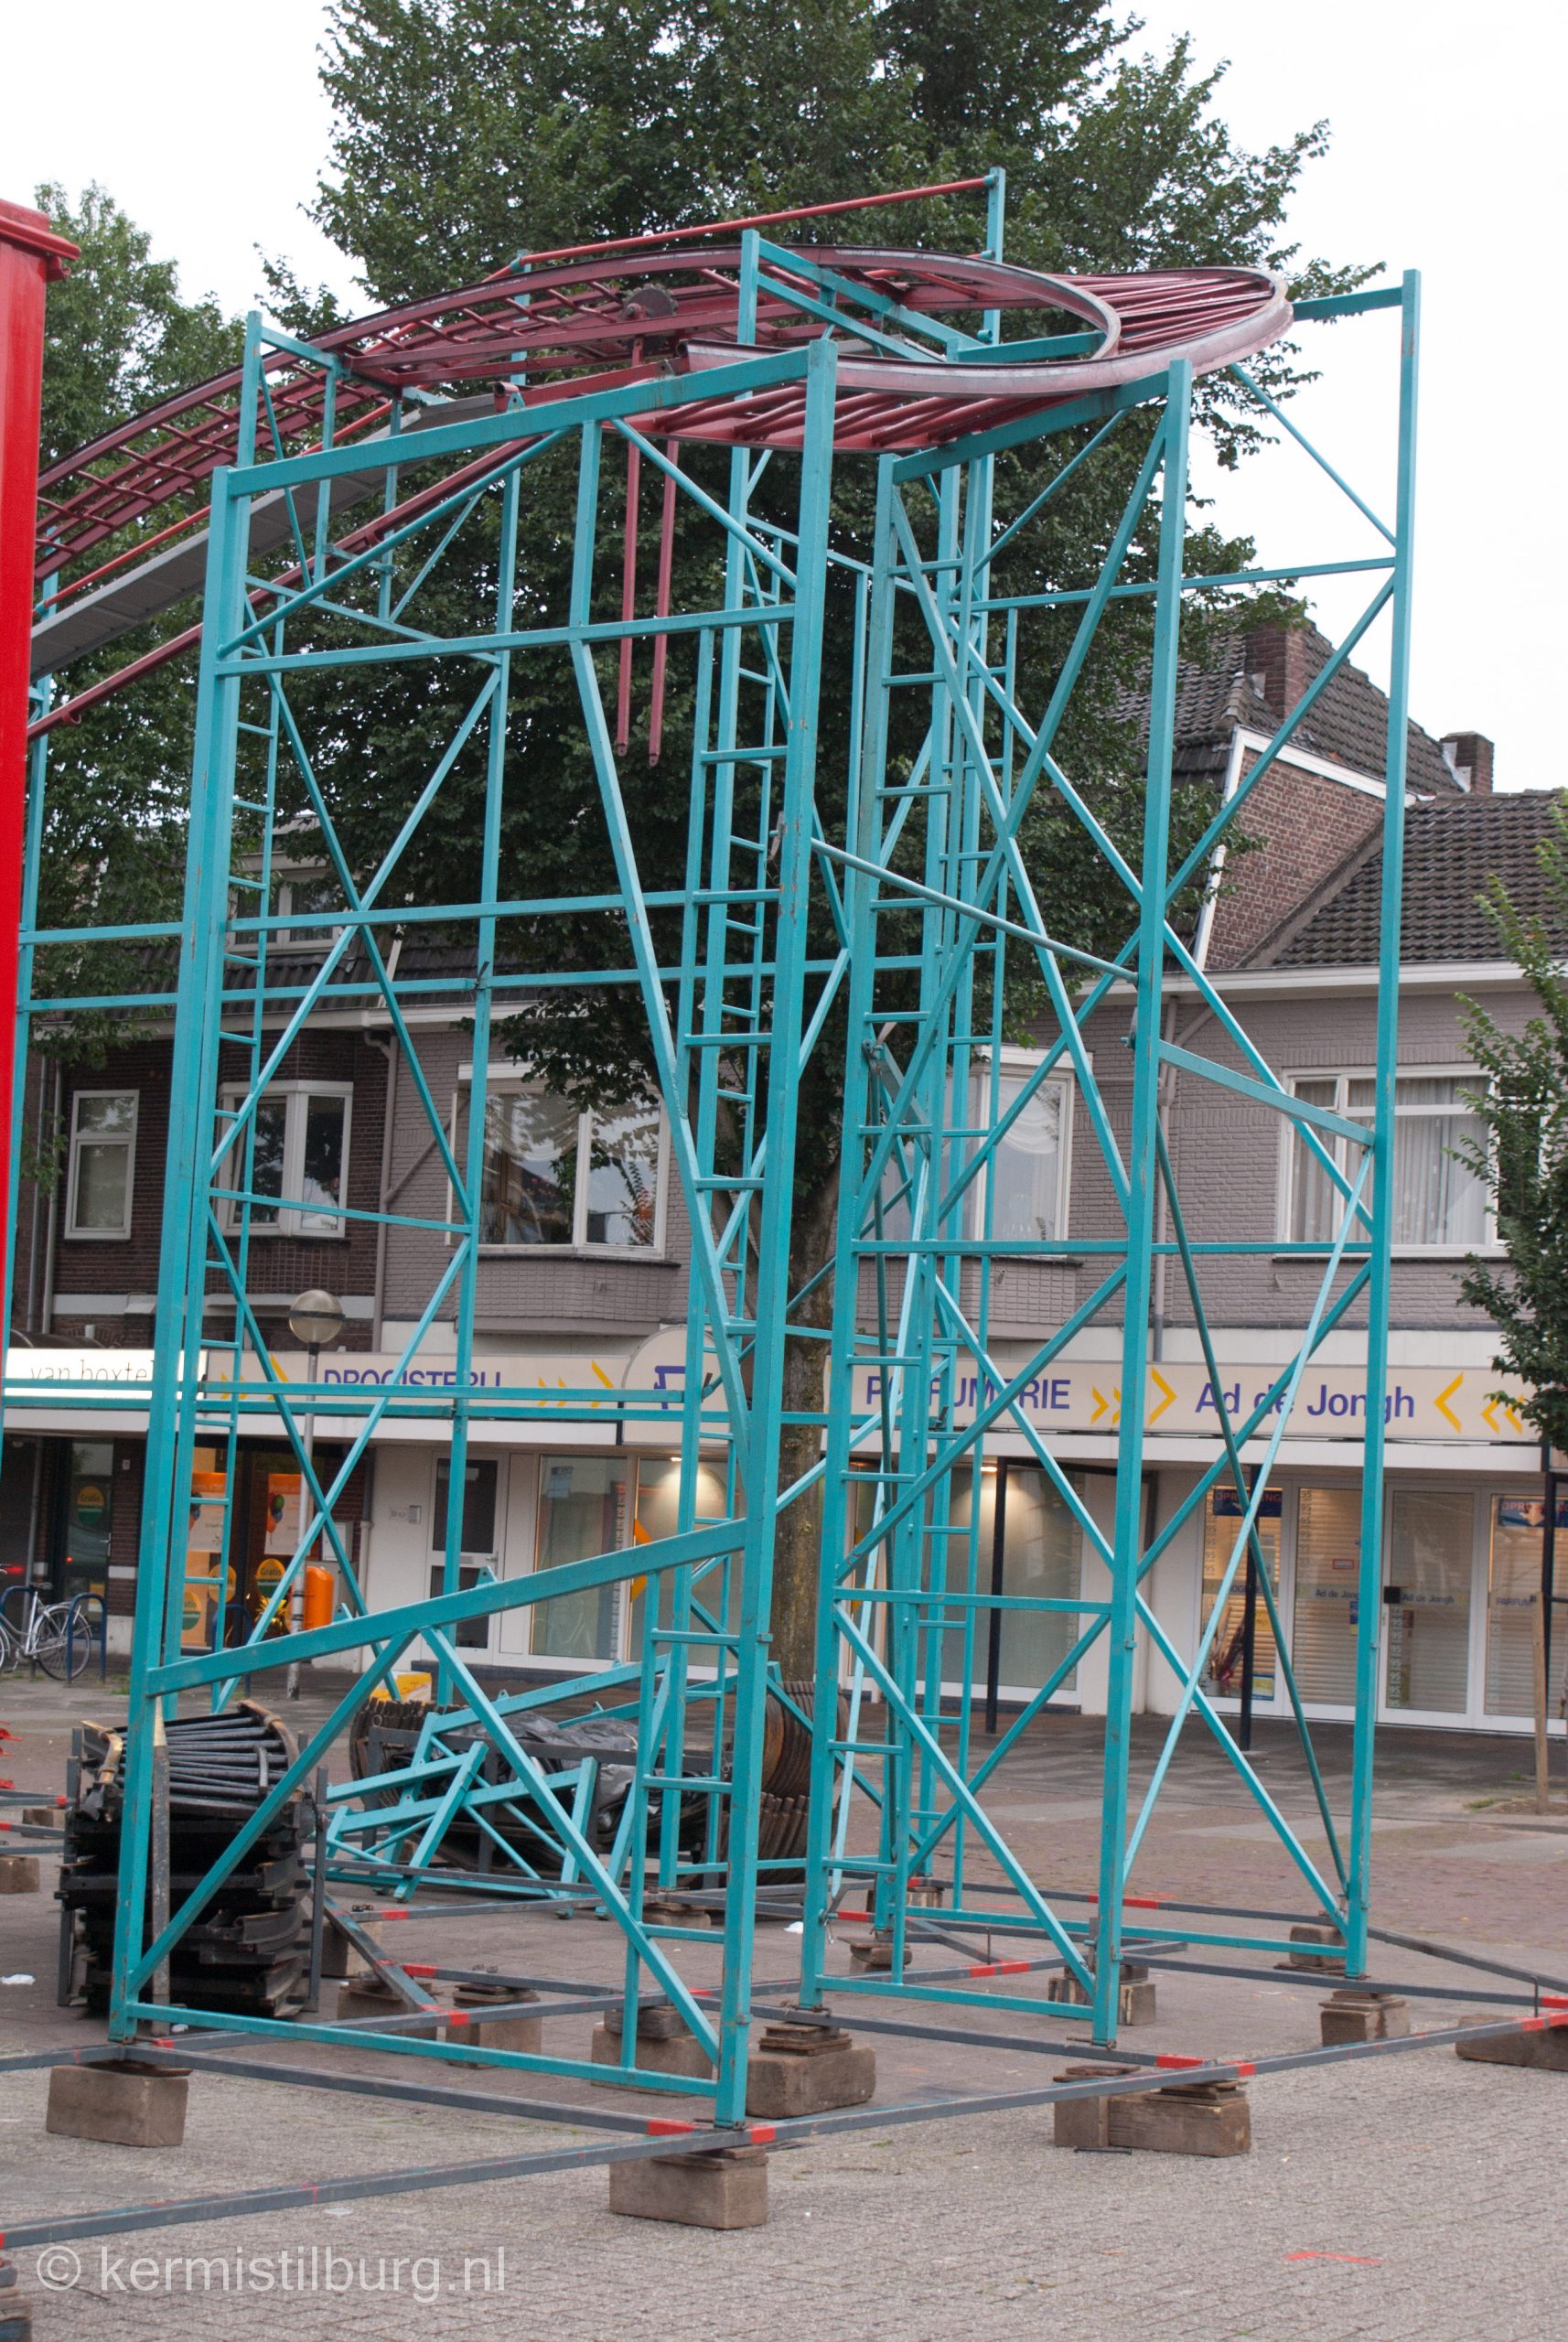 2007, Kermis, Tilburg, Tilburgse kermis, bouwen